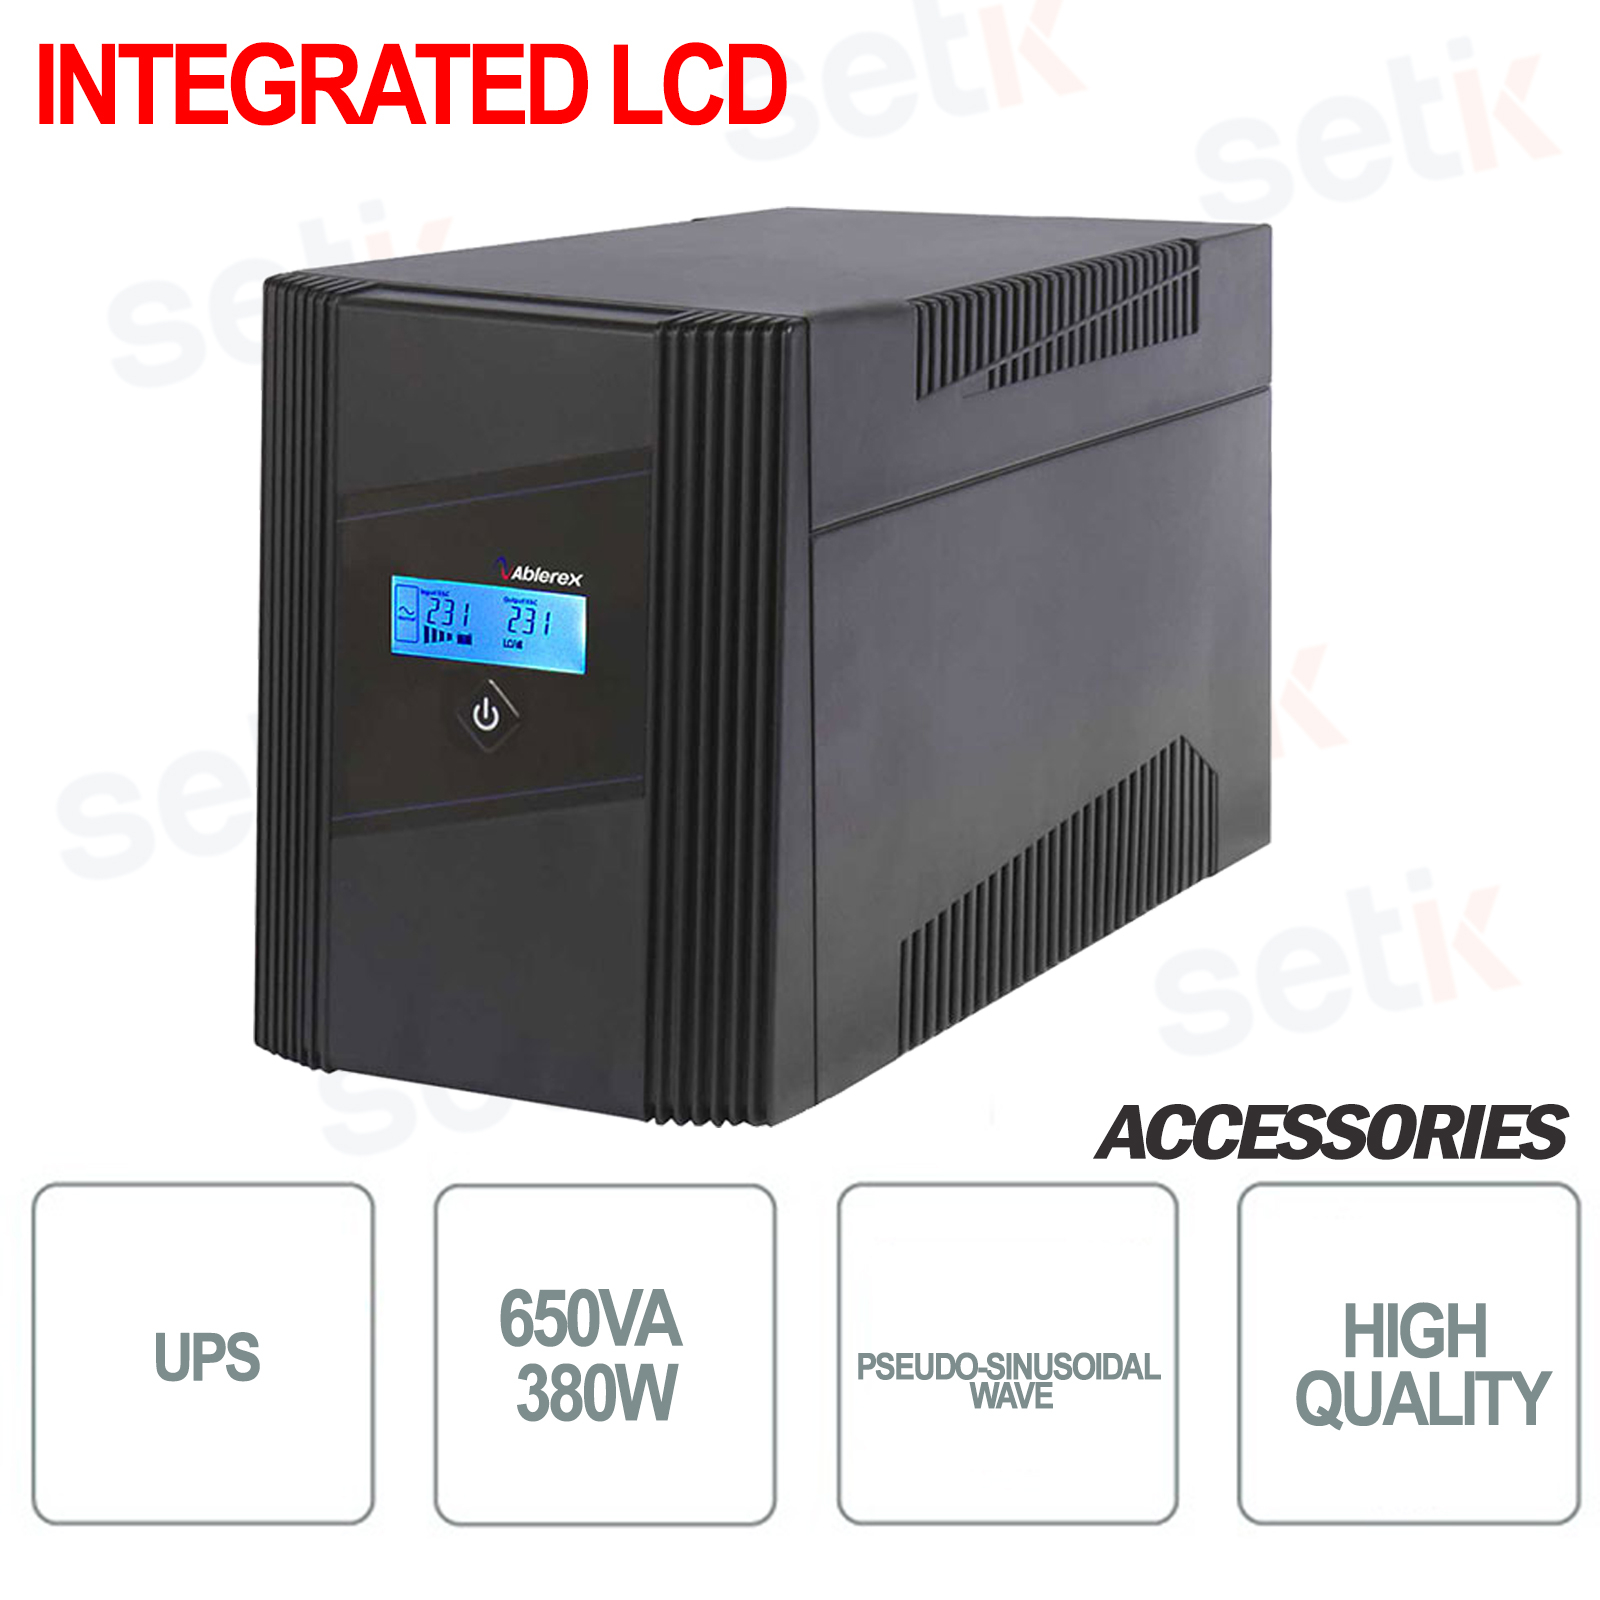 uninterruptible power supply-ups450lcd-270w-integrates-lcd-screen.jpg